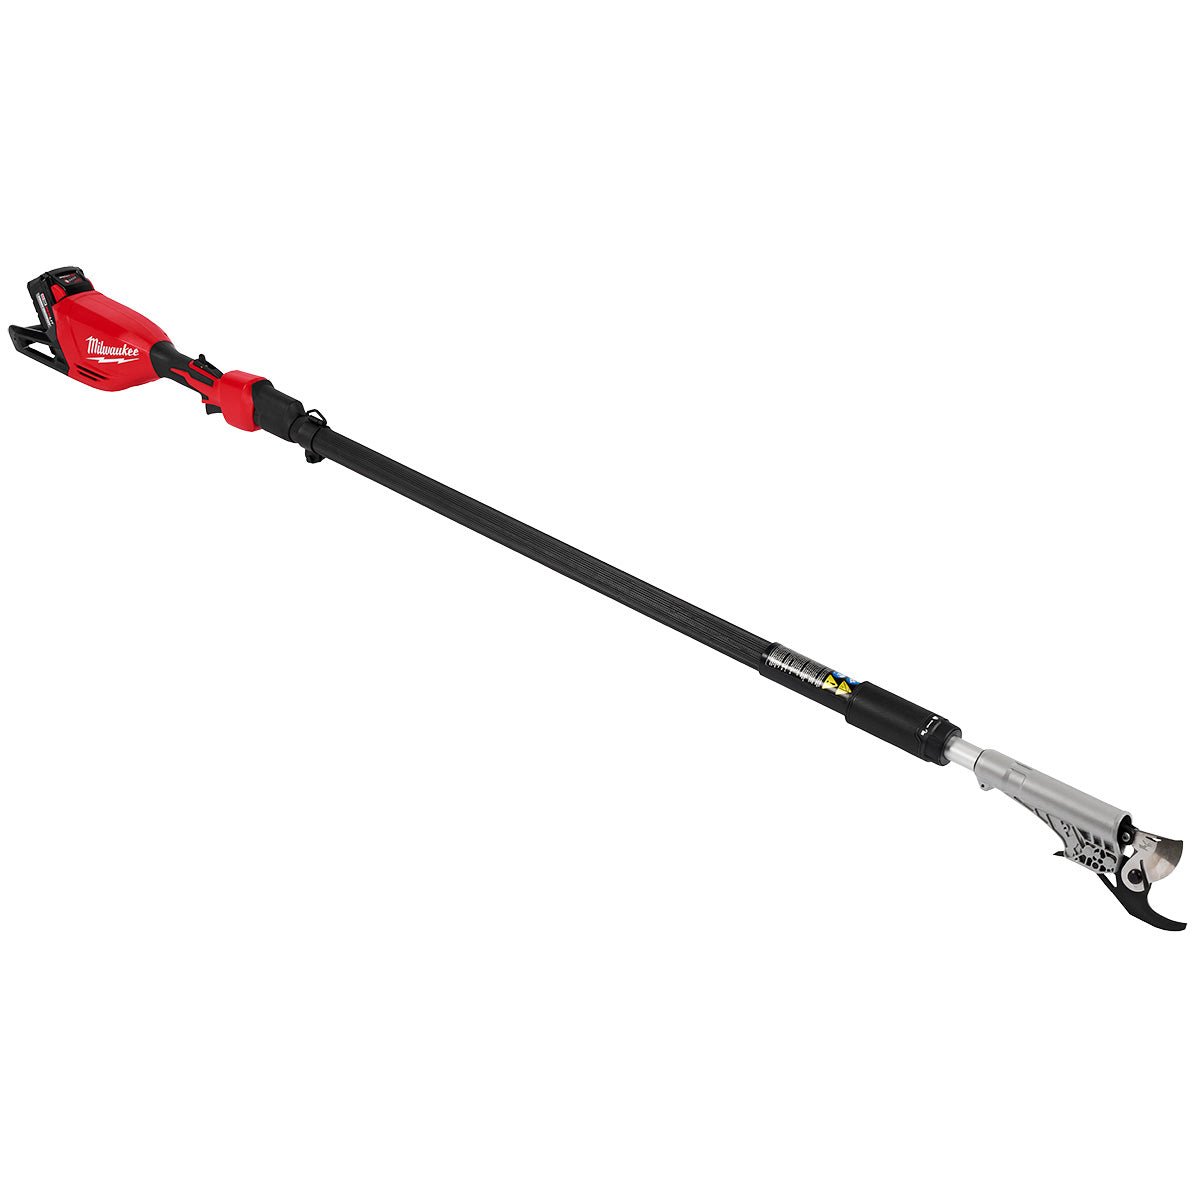 Milwaukee 3008-21- M18™ Brushless Telescoping Pole Pruning Shears Kit